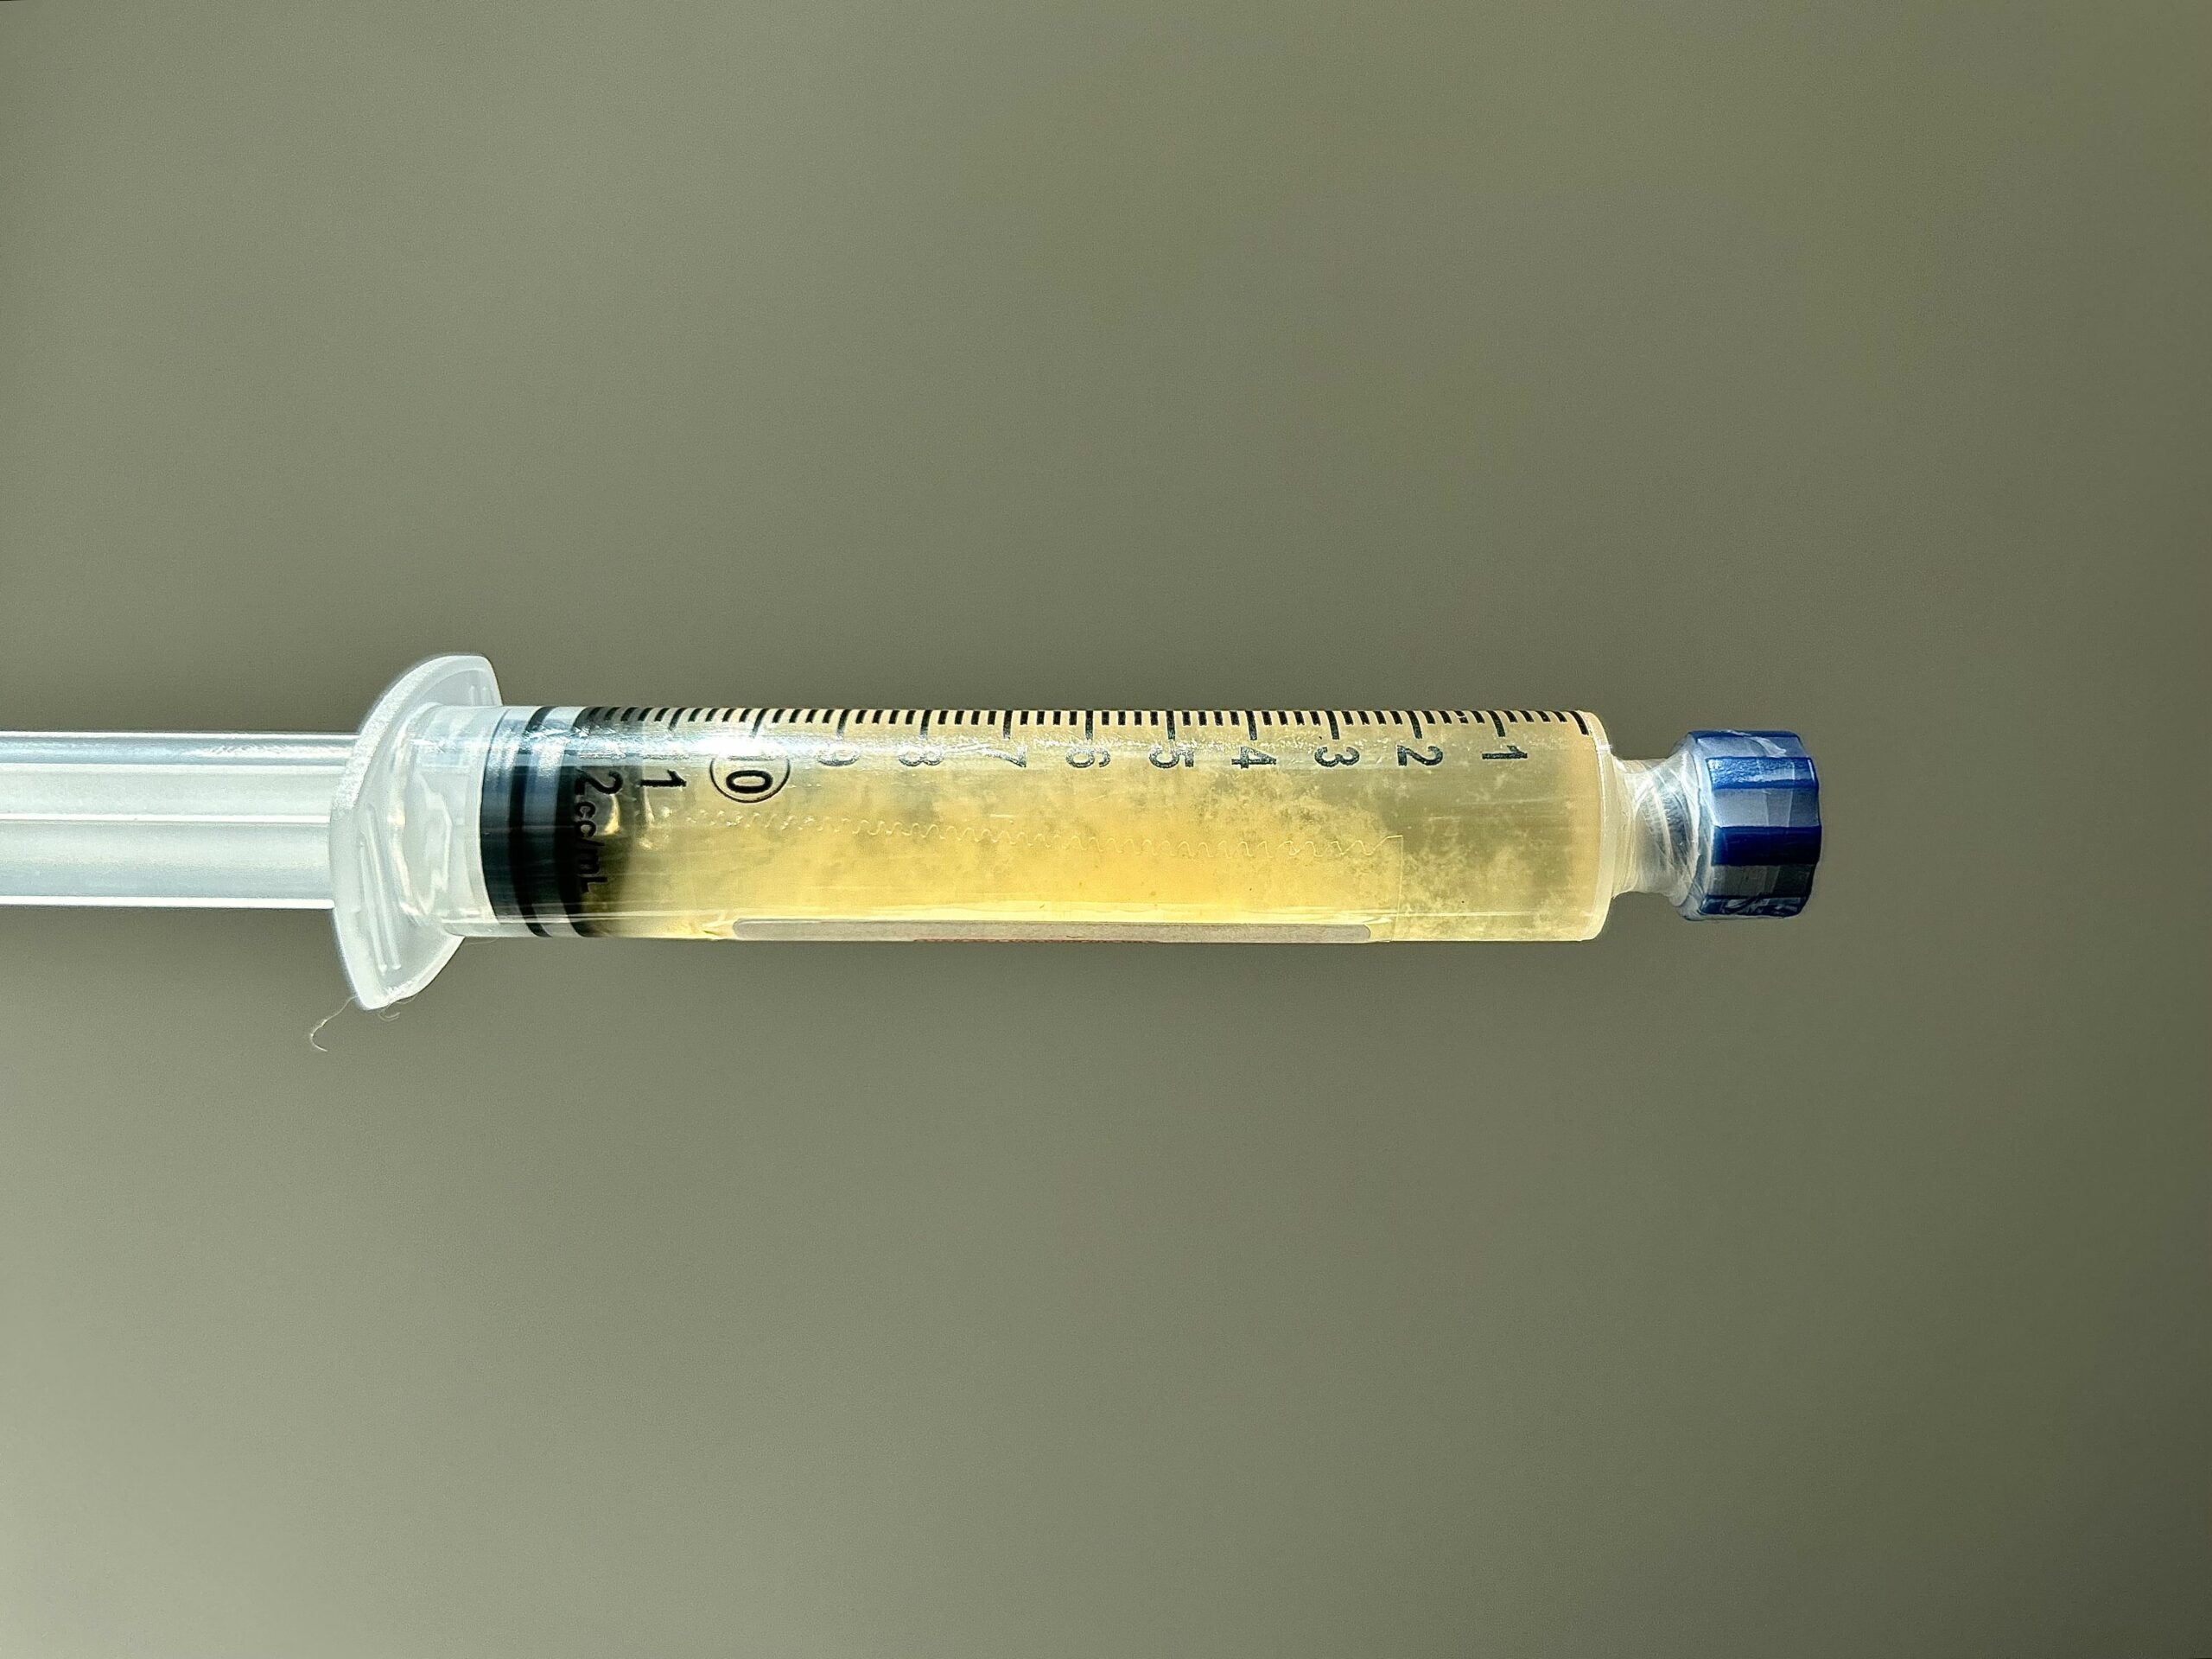 Psilocybin mushroom spore syringe